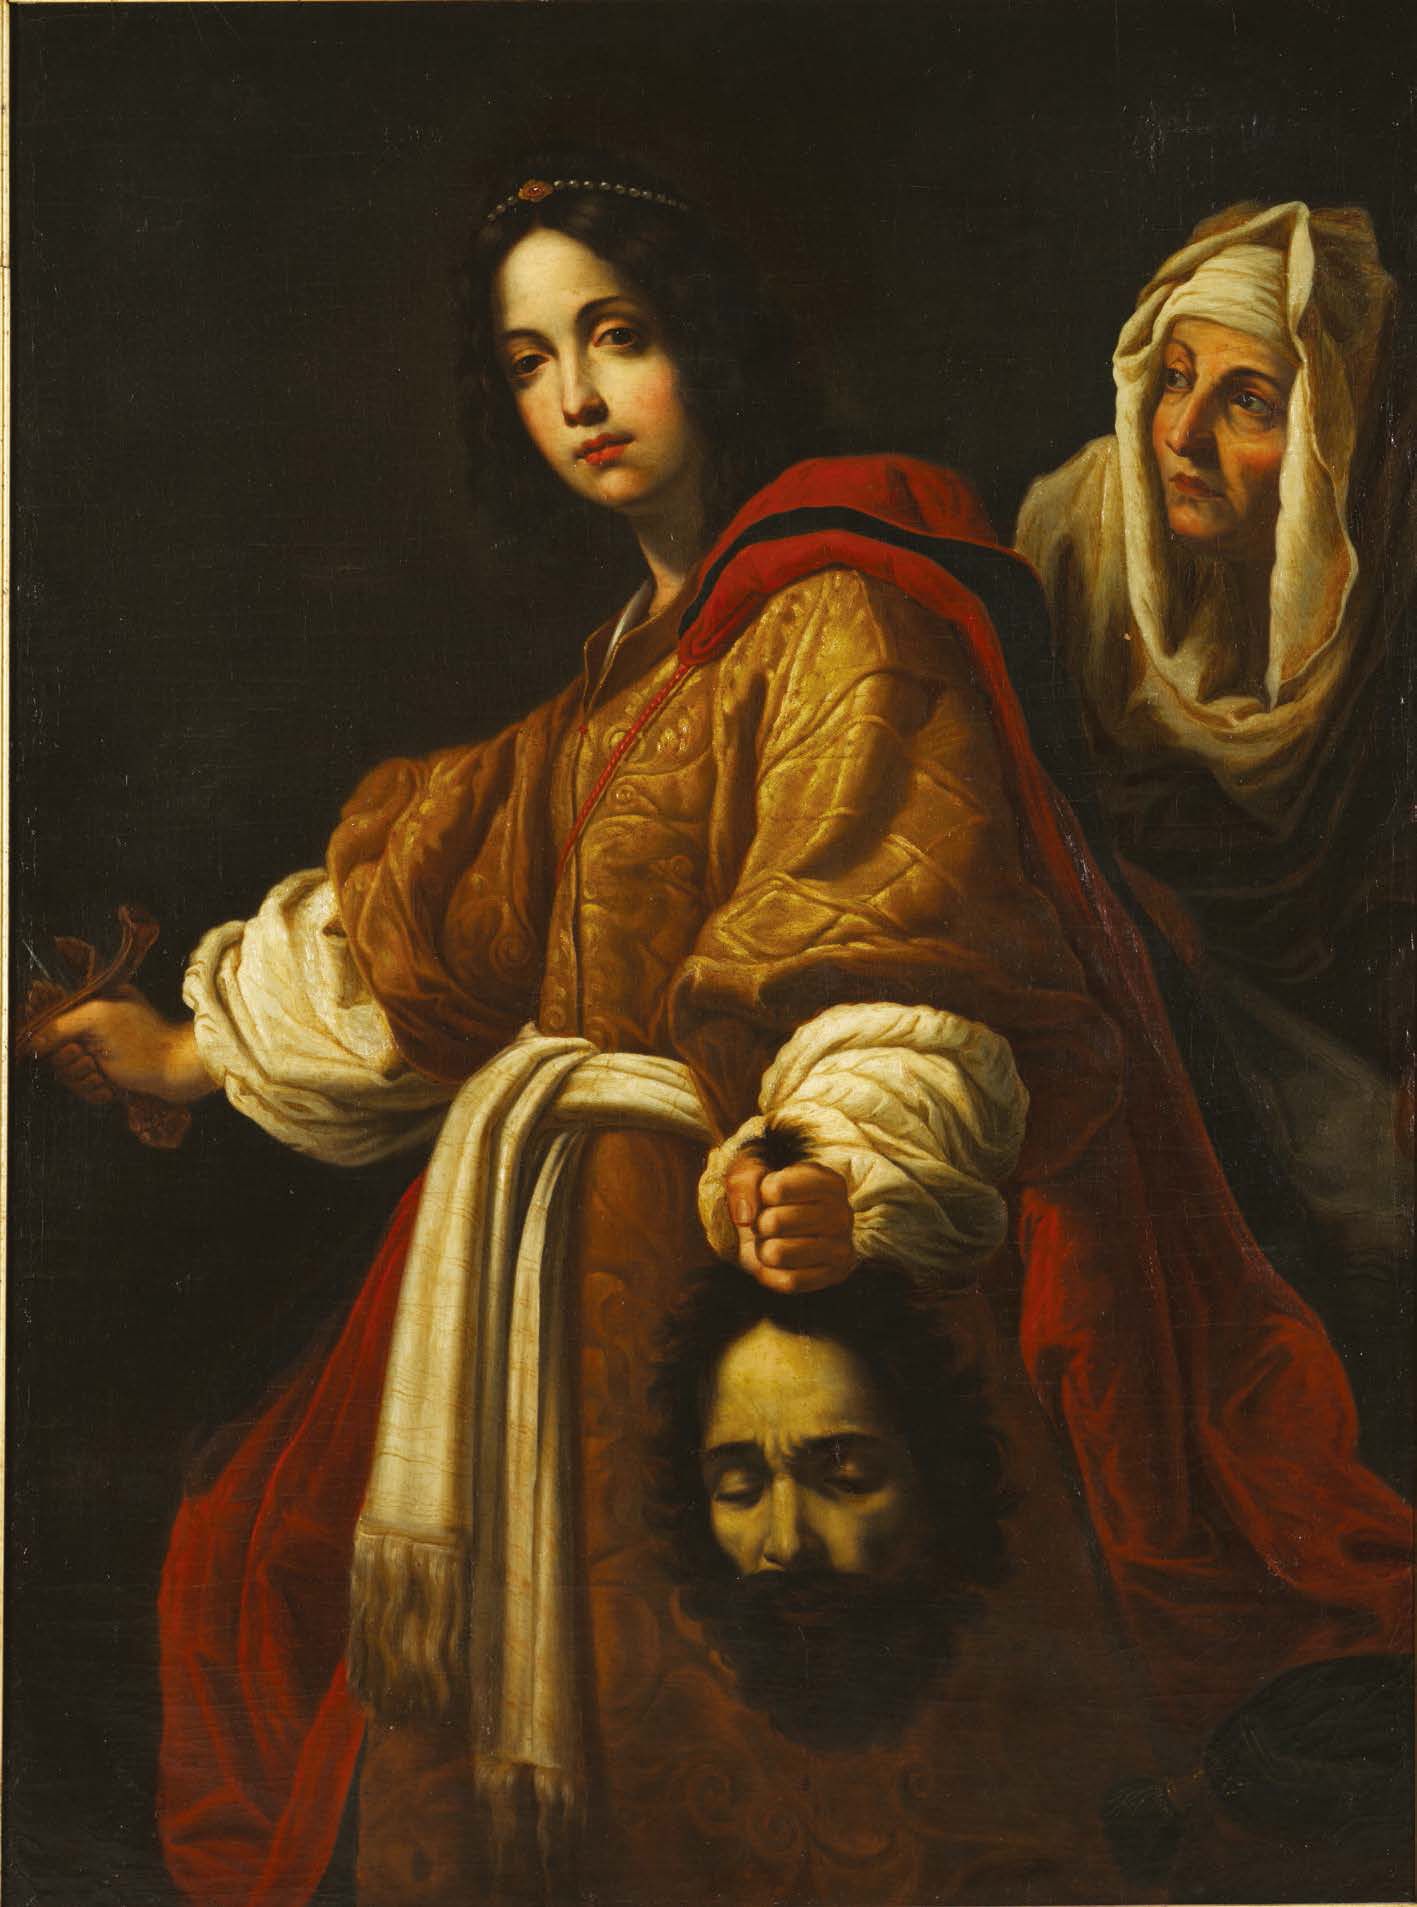 CLARDI (ÉCOLE FLORENTINE DE LA FIN DU XIXE SIÈCLE) 
Judith and the head of Holof&hellip;